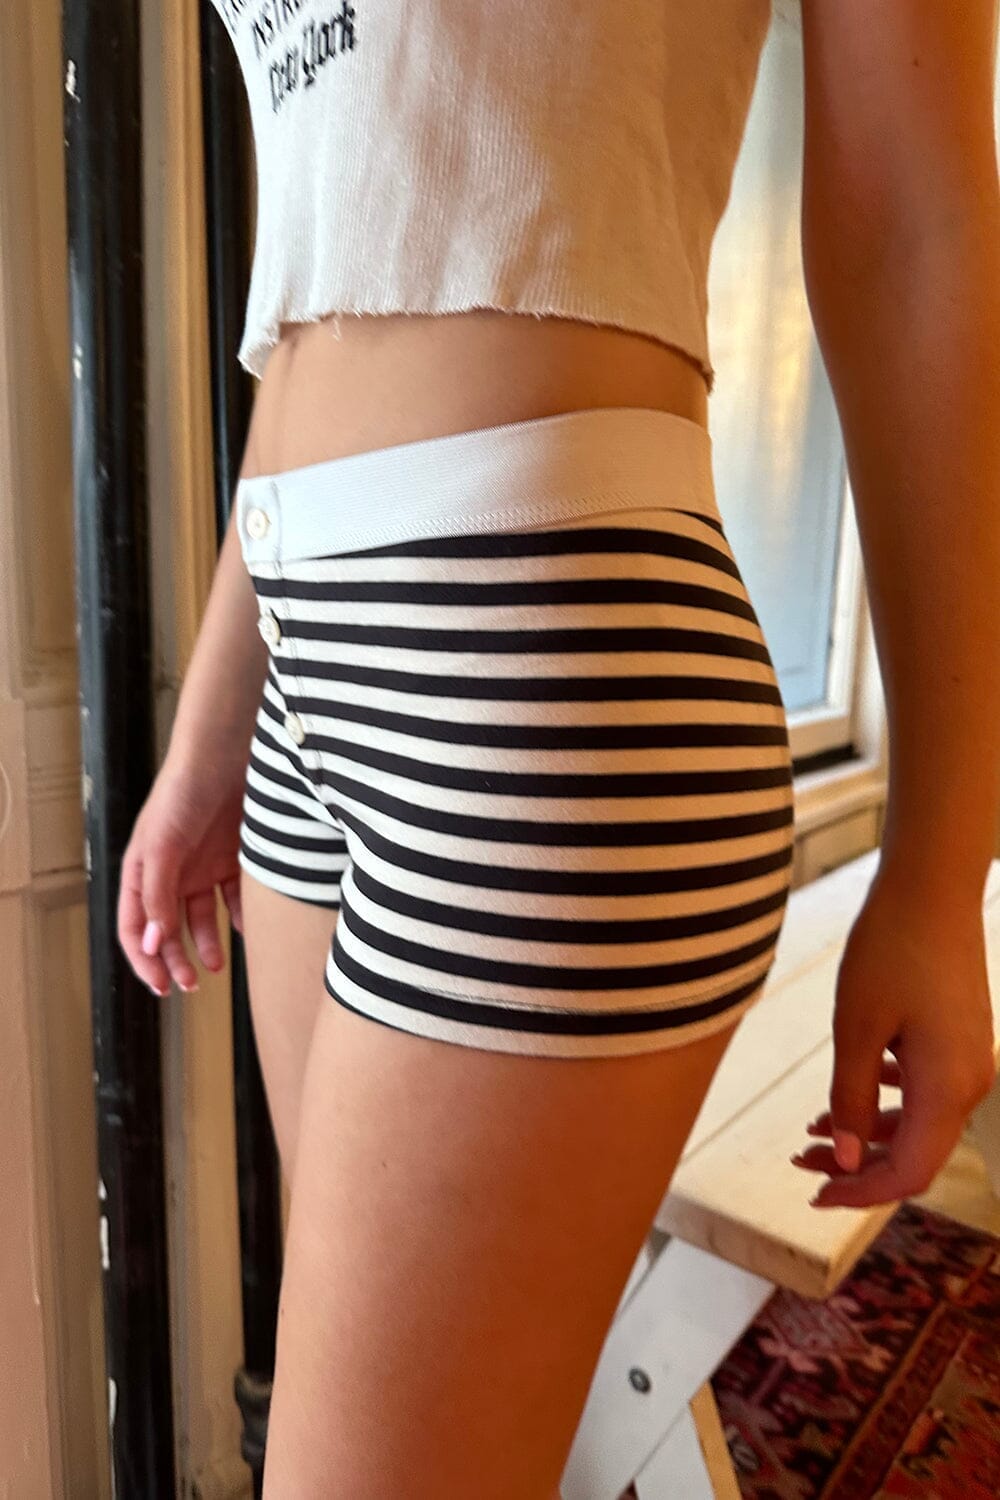 Brandy Melville Stripes Black Casual Pants Size Sm (Estimated